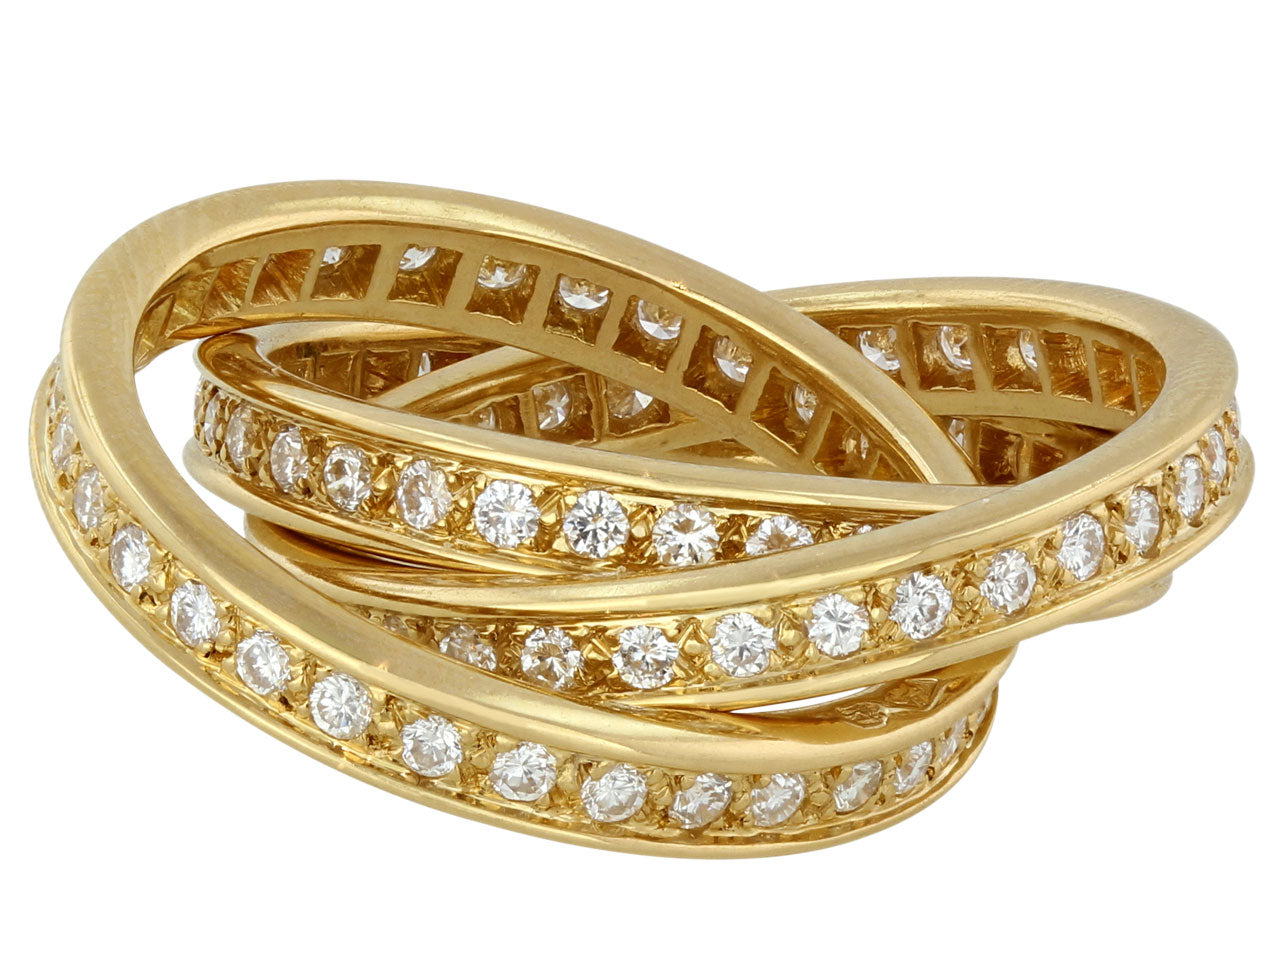 Cartier Diamond 'Trinity de Cartier' Ring in 18K